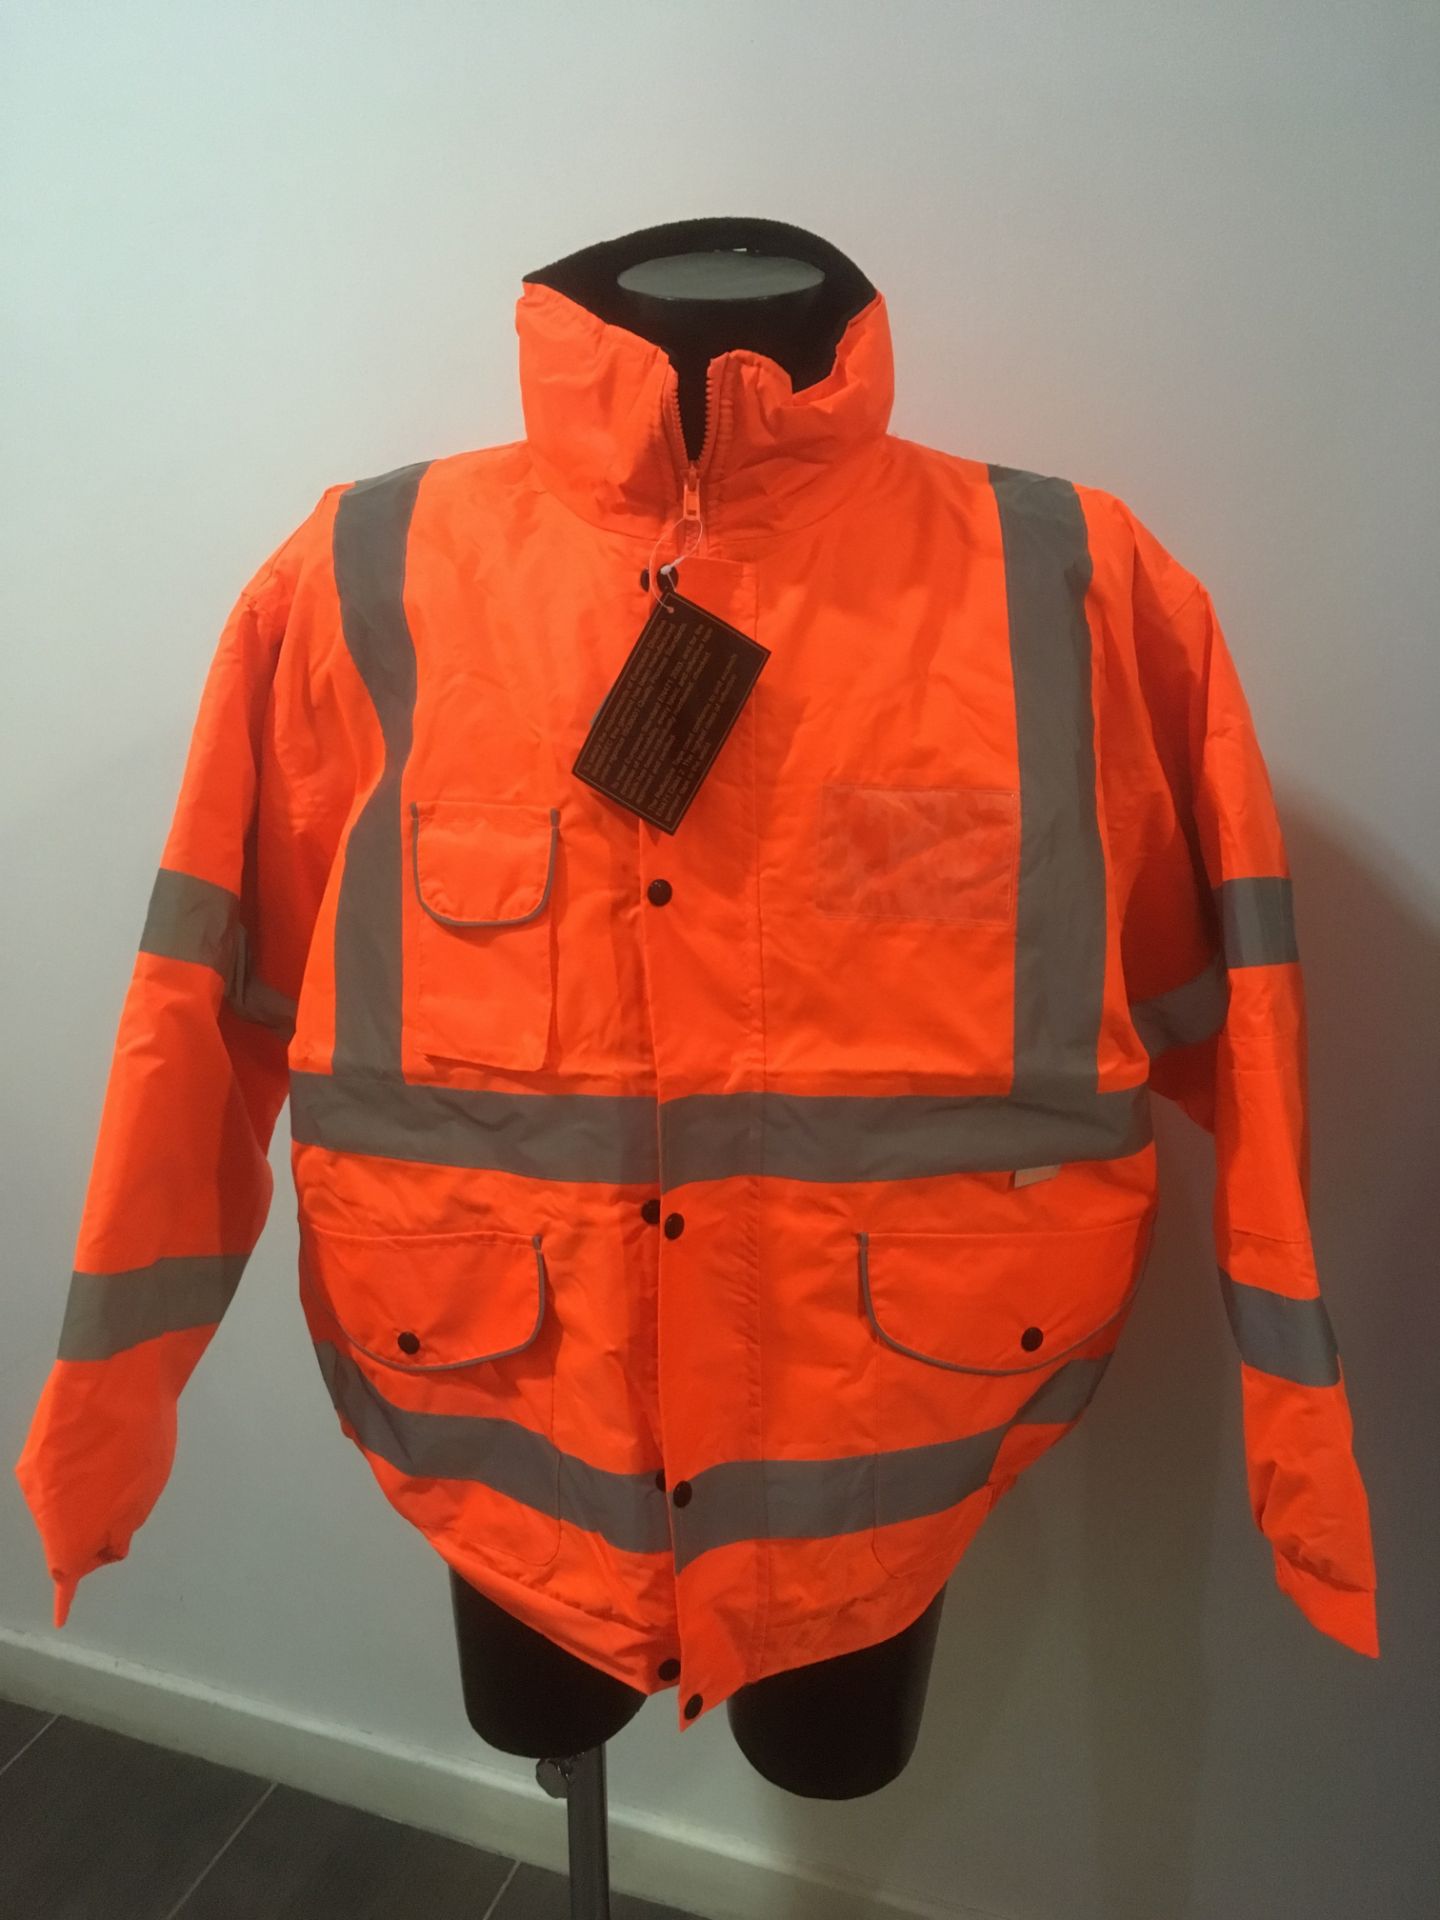 PPE Orange Bomber x 25 (Various Sizes in Lot)